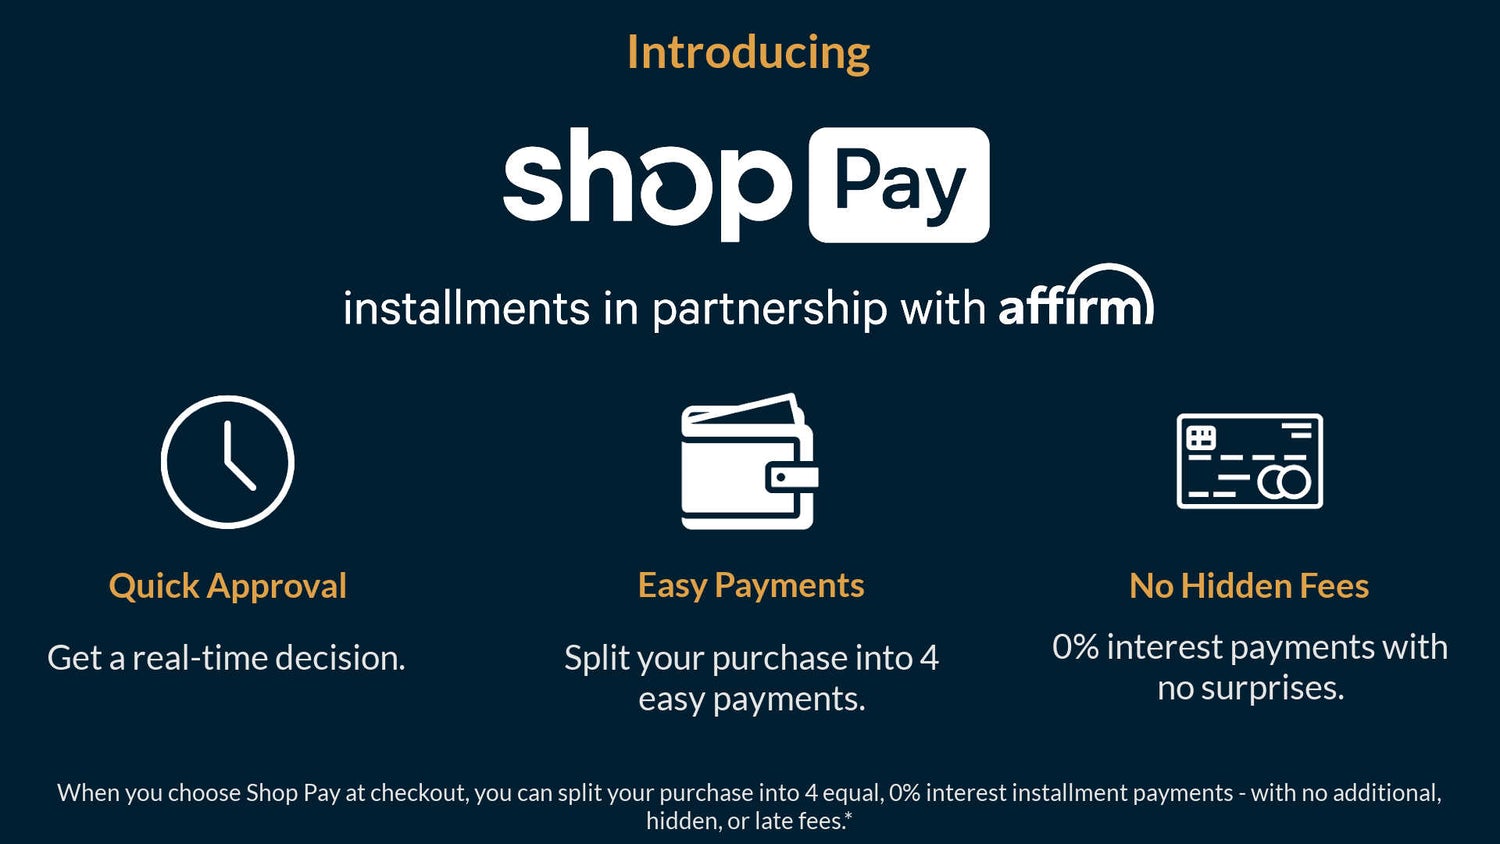 ShopPay / Affirm